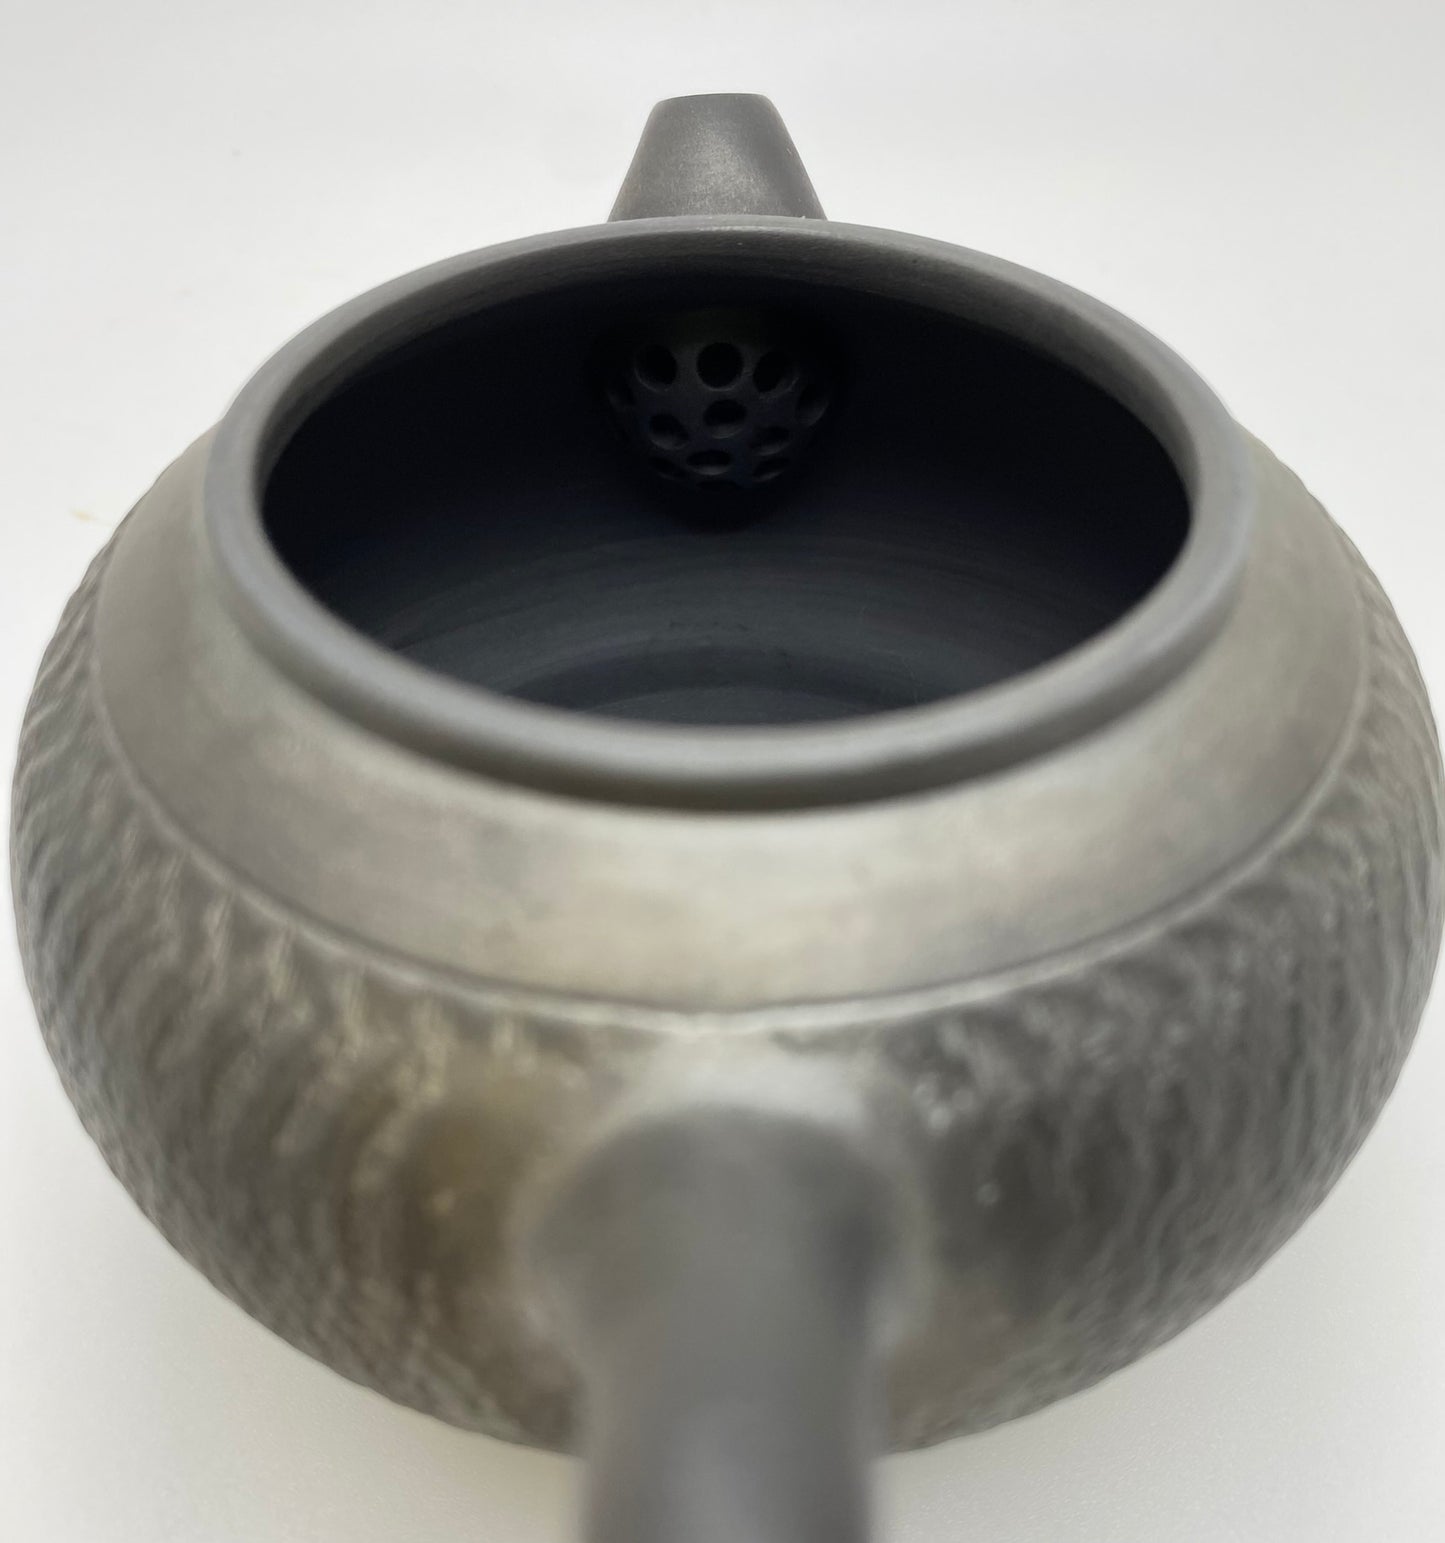 Master Lin's Hand-thrown Knifed Smoked Black Clay Feng Gu Tea Pot 150ml